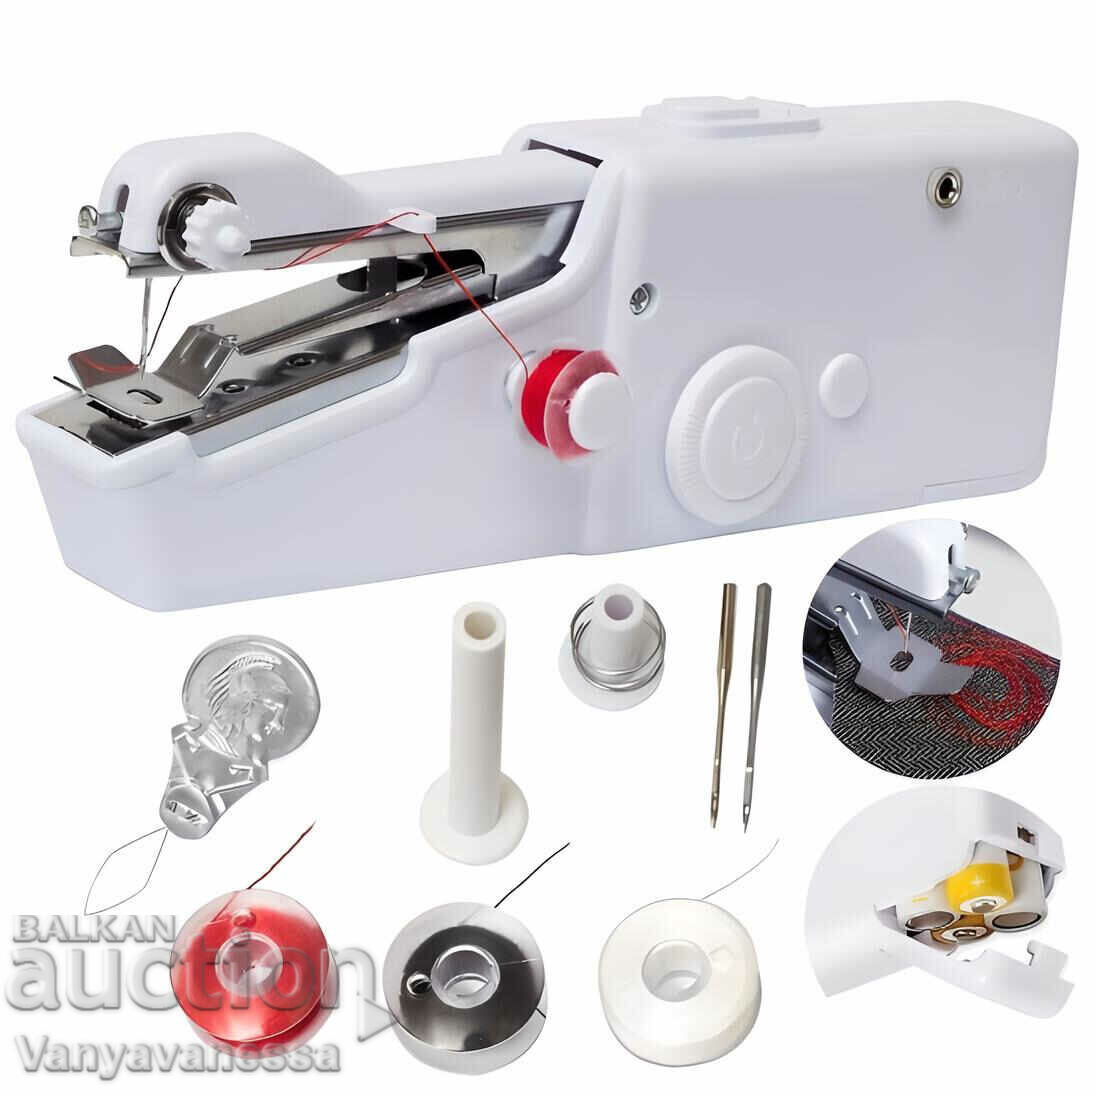 Manual sewing machine